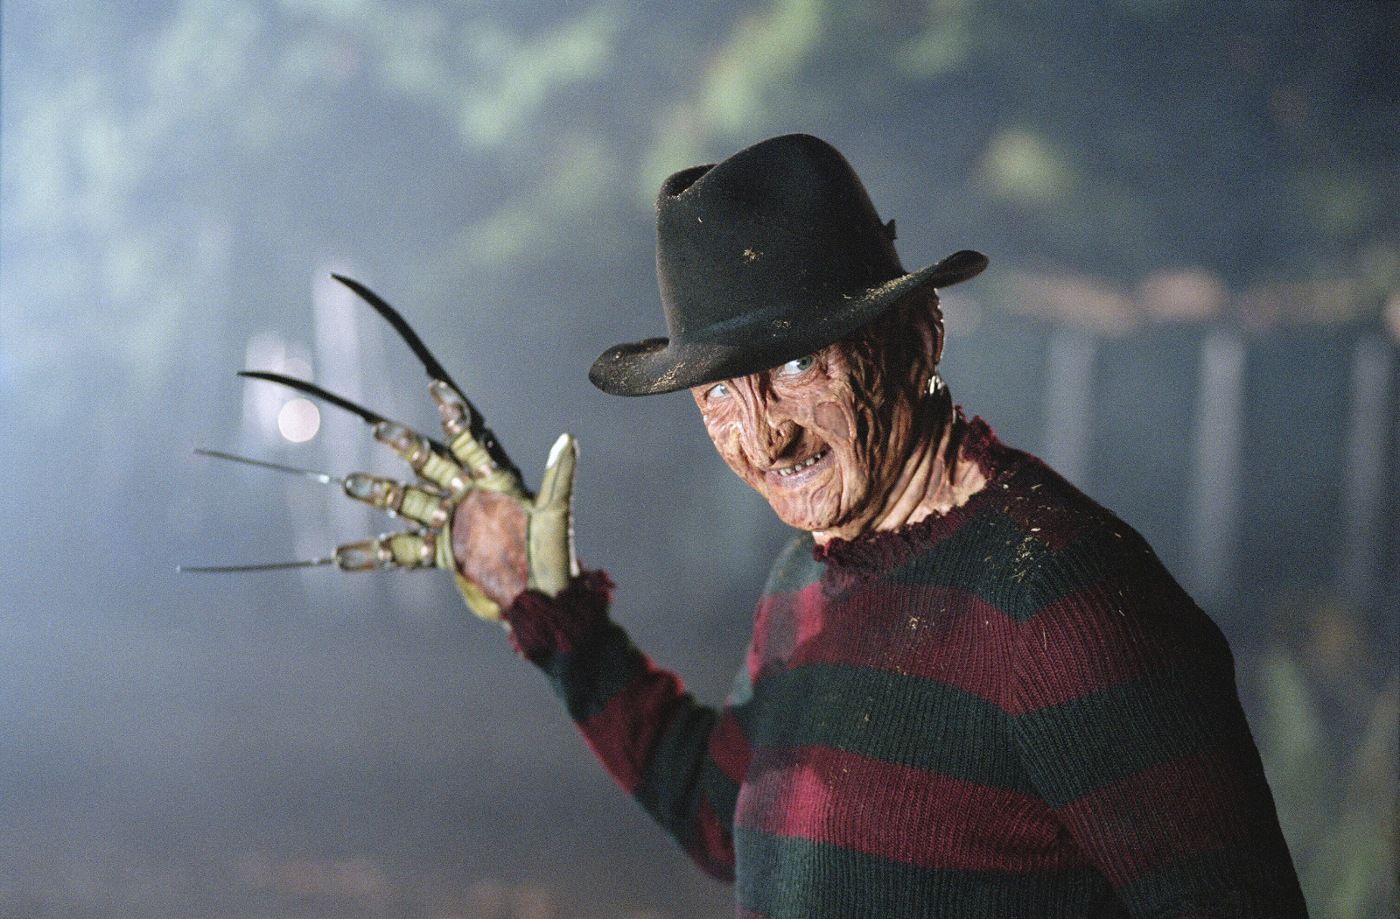 A Nightmare on Elm Street - Wikipedia